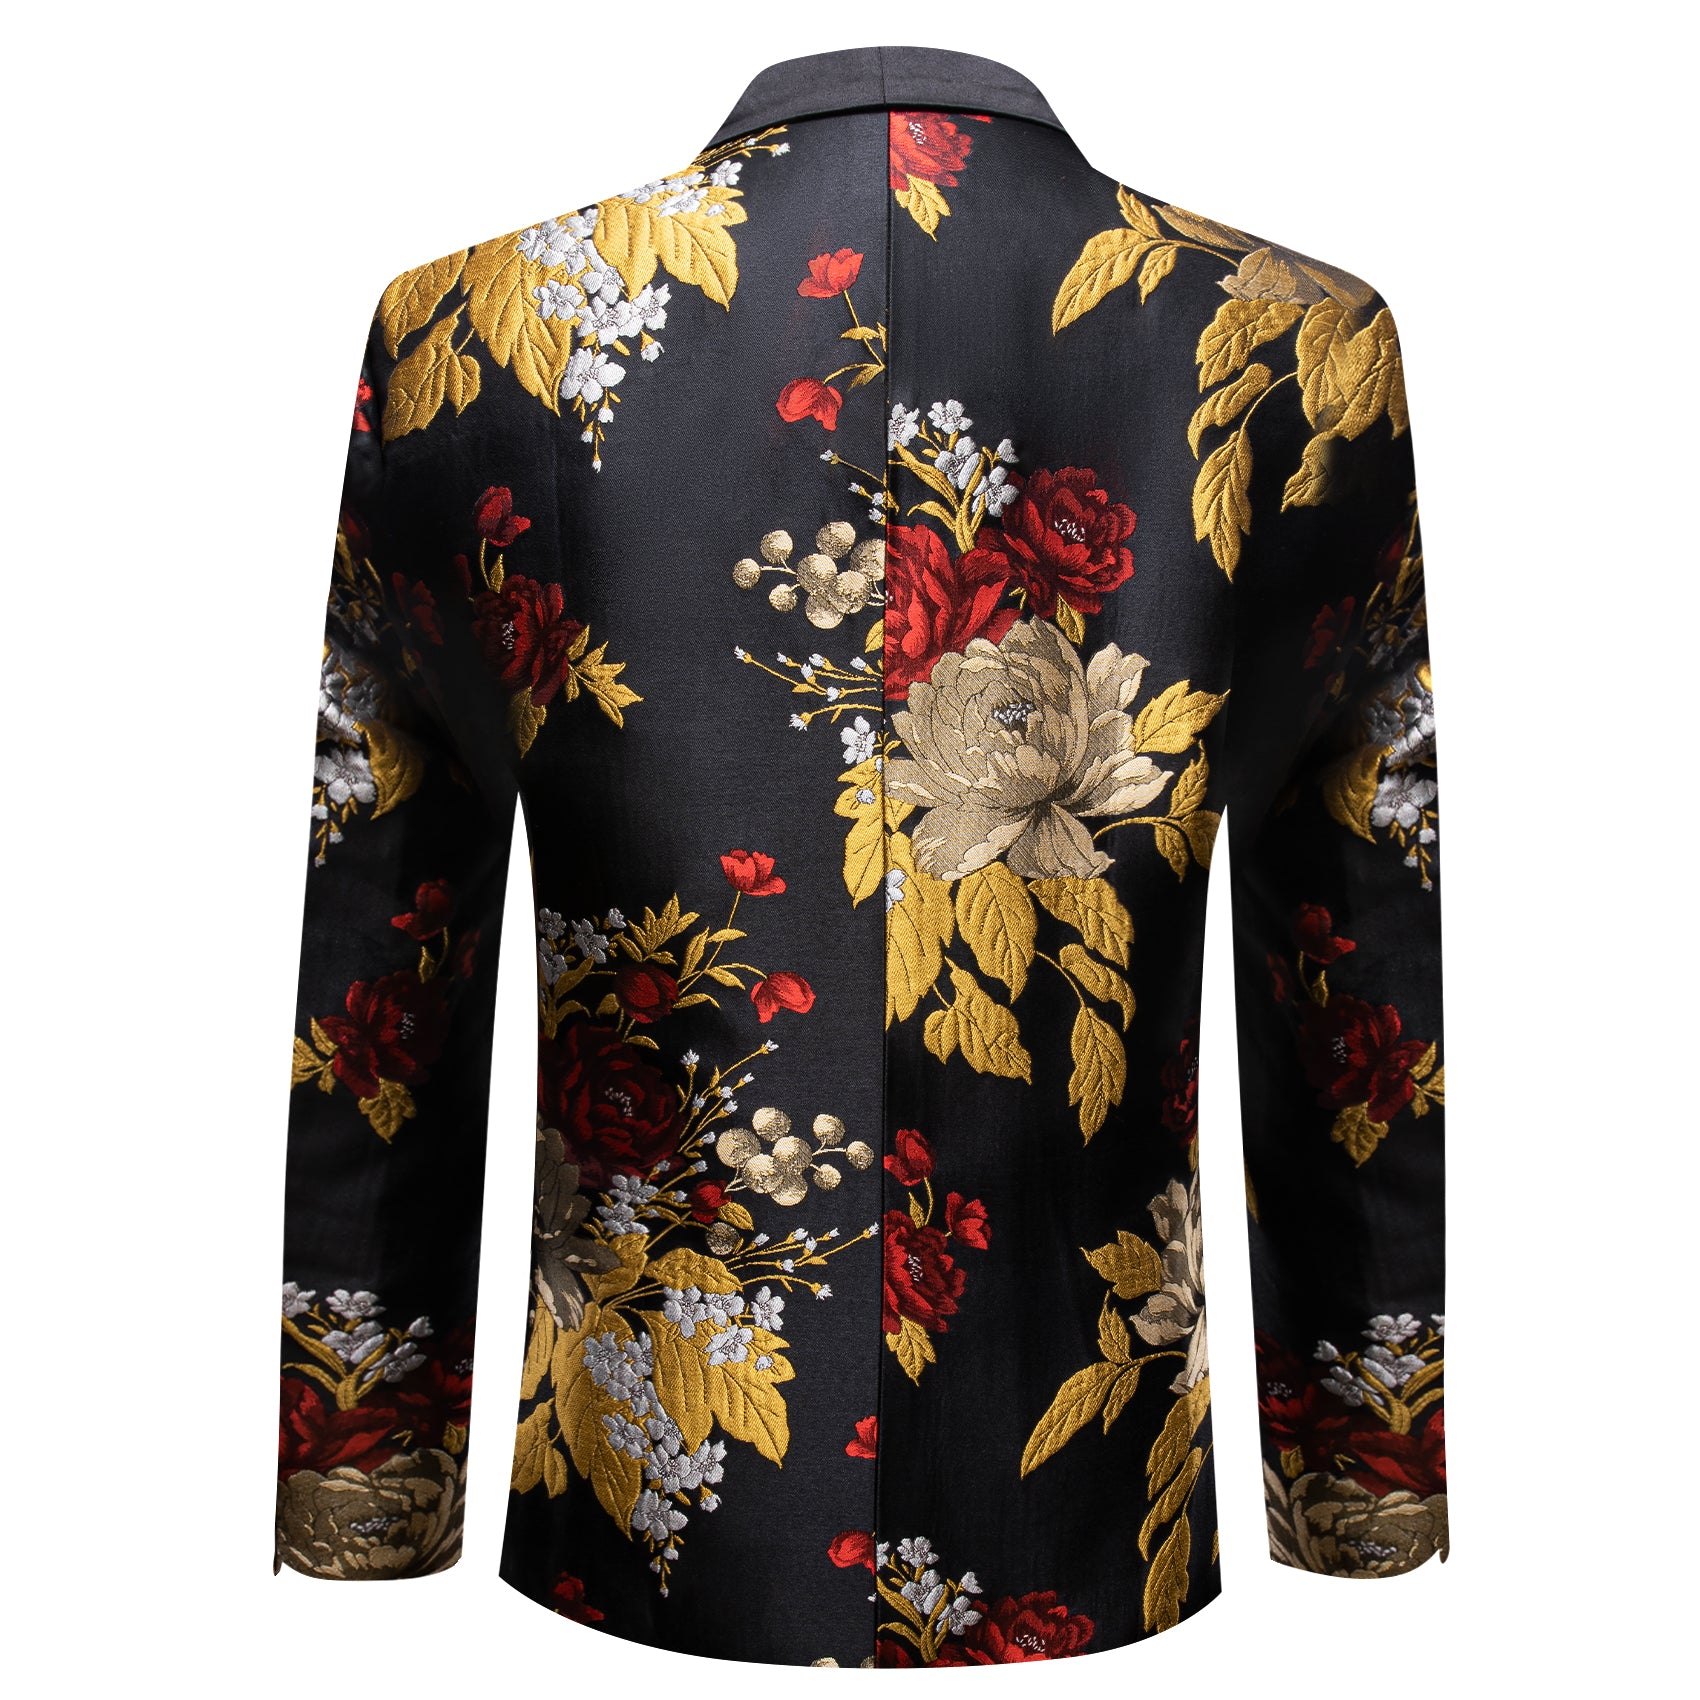 Barry.wang Shawl Collar Shirt Men's Black Yellow Floral Suit Jacket